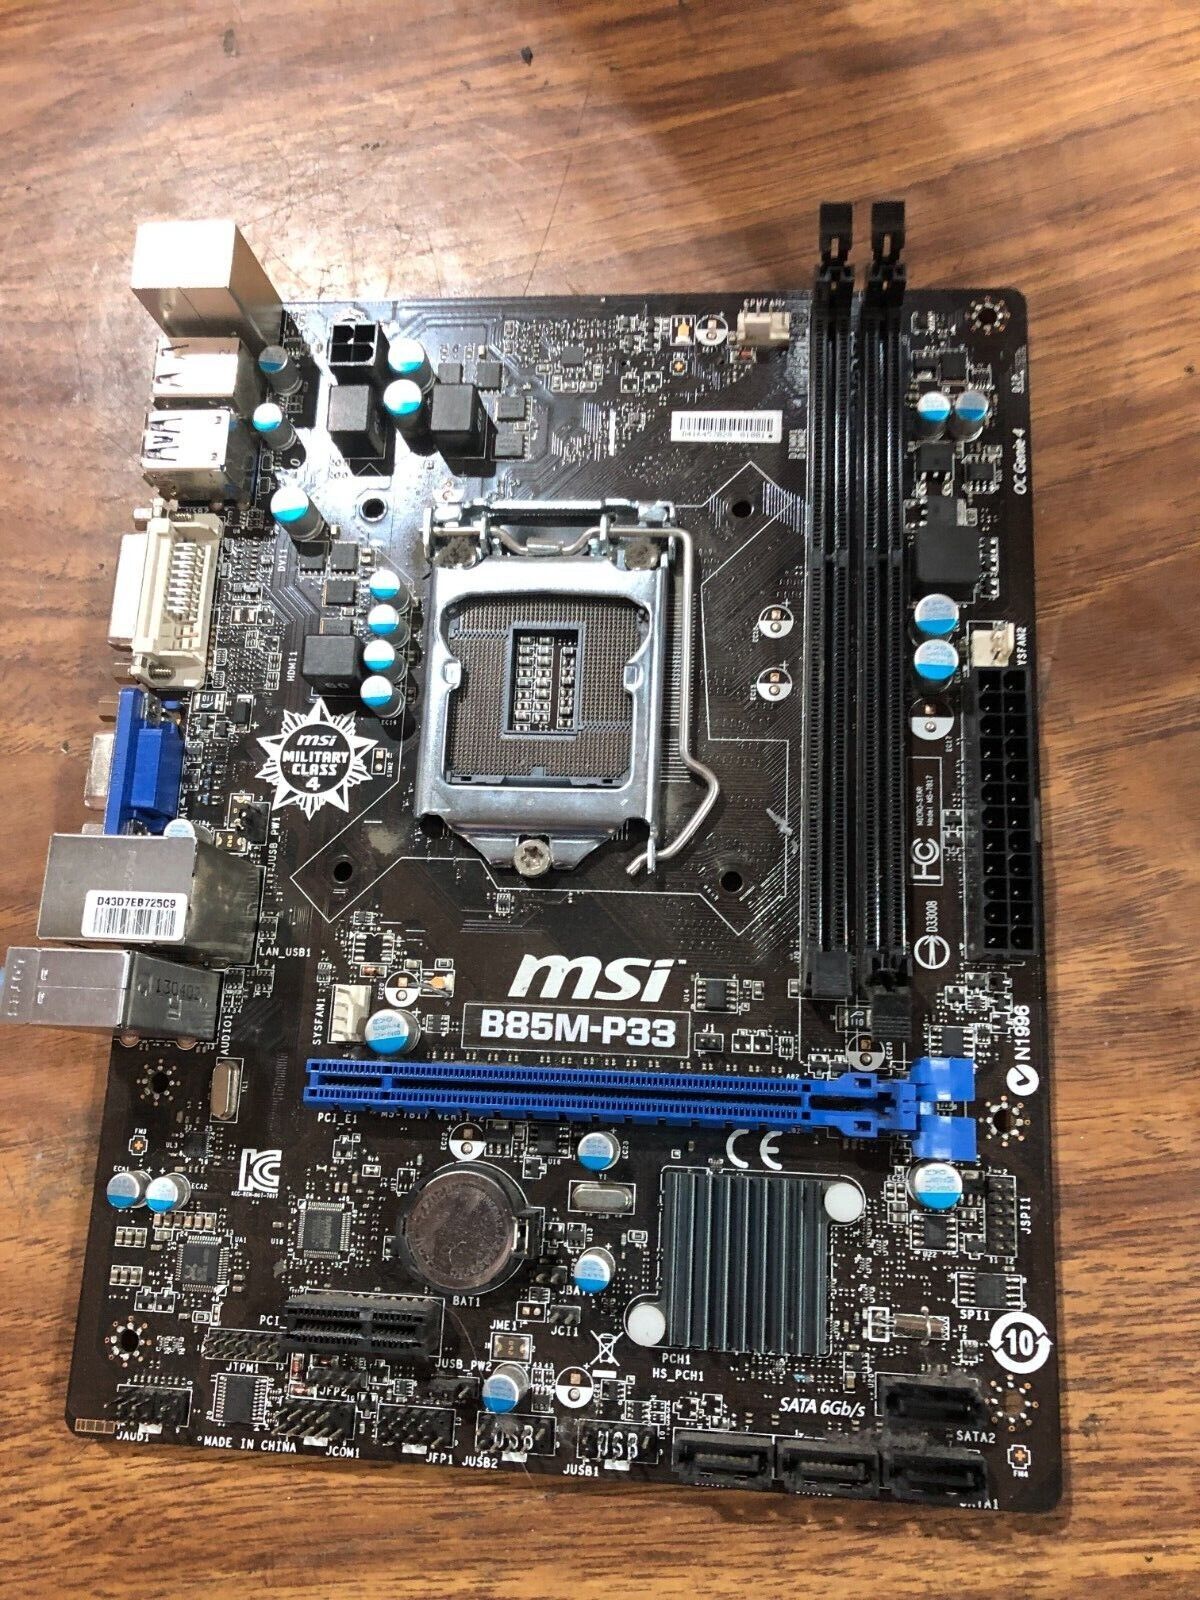  MSI B85M-P33 Intel B85 Motherboard 